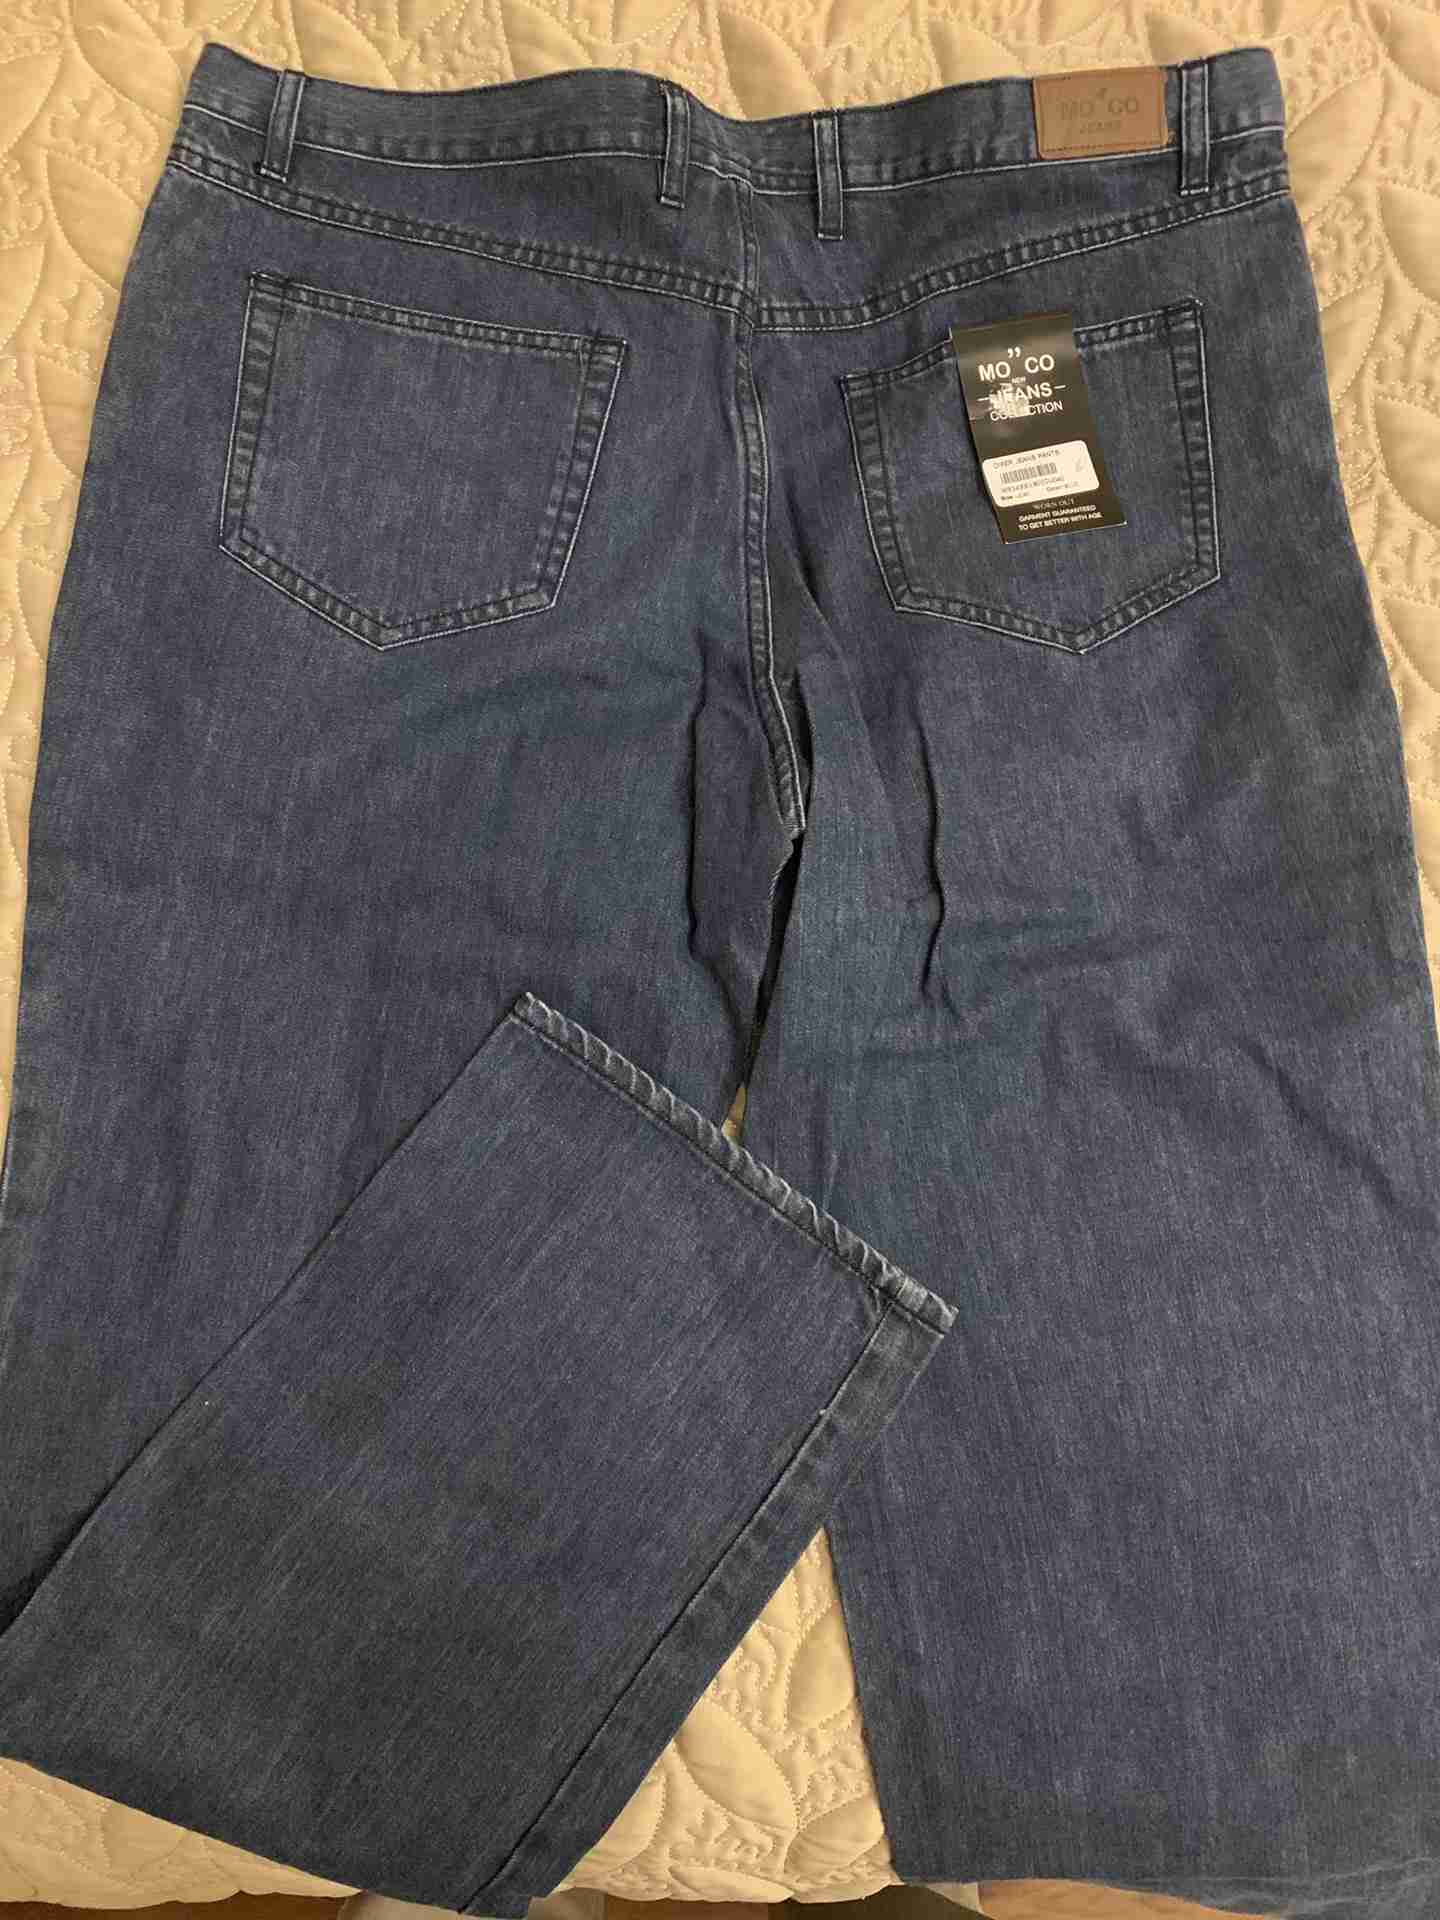 Omega Royal Blue Deville-  Mo”co jeans size 40...